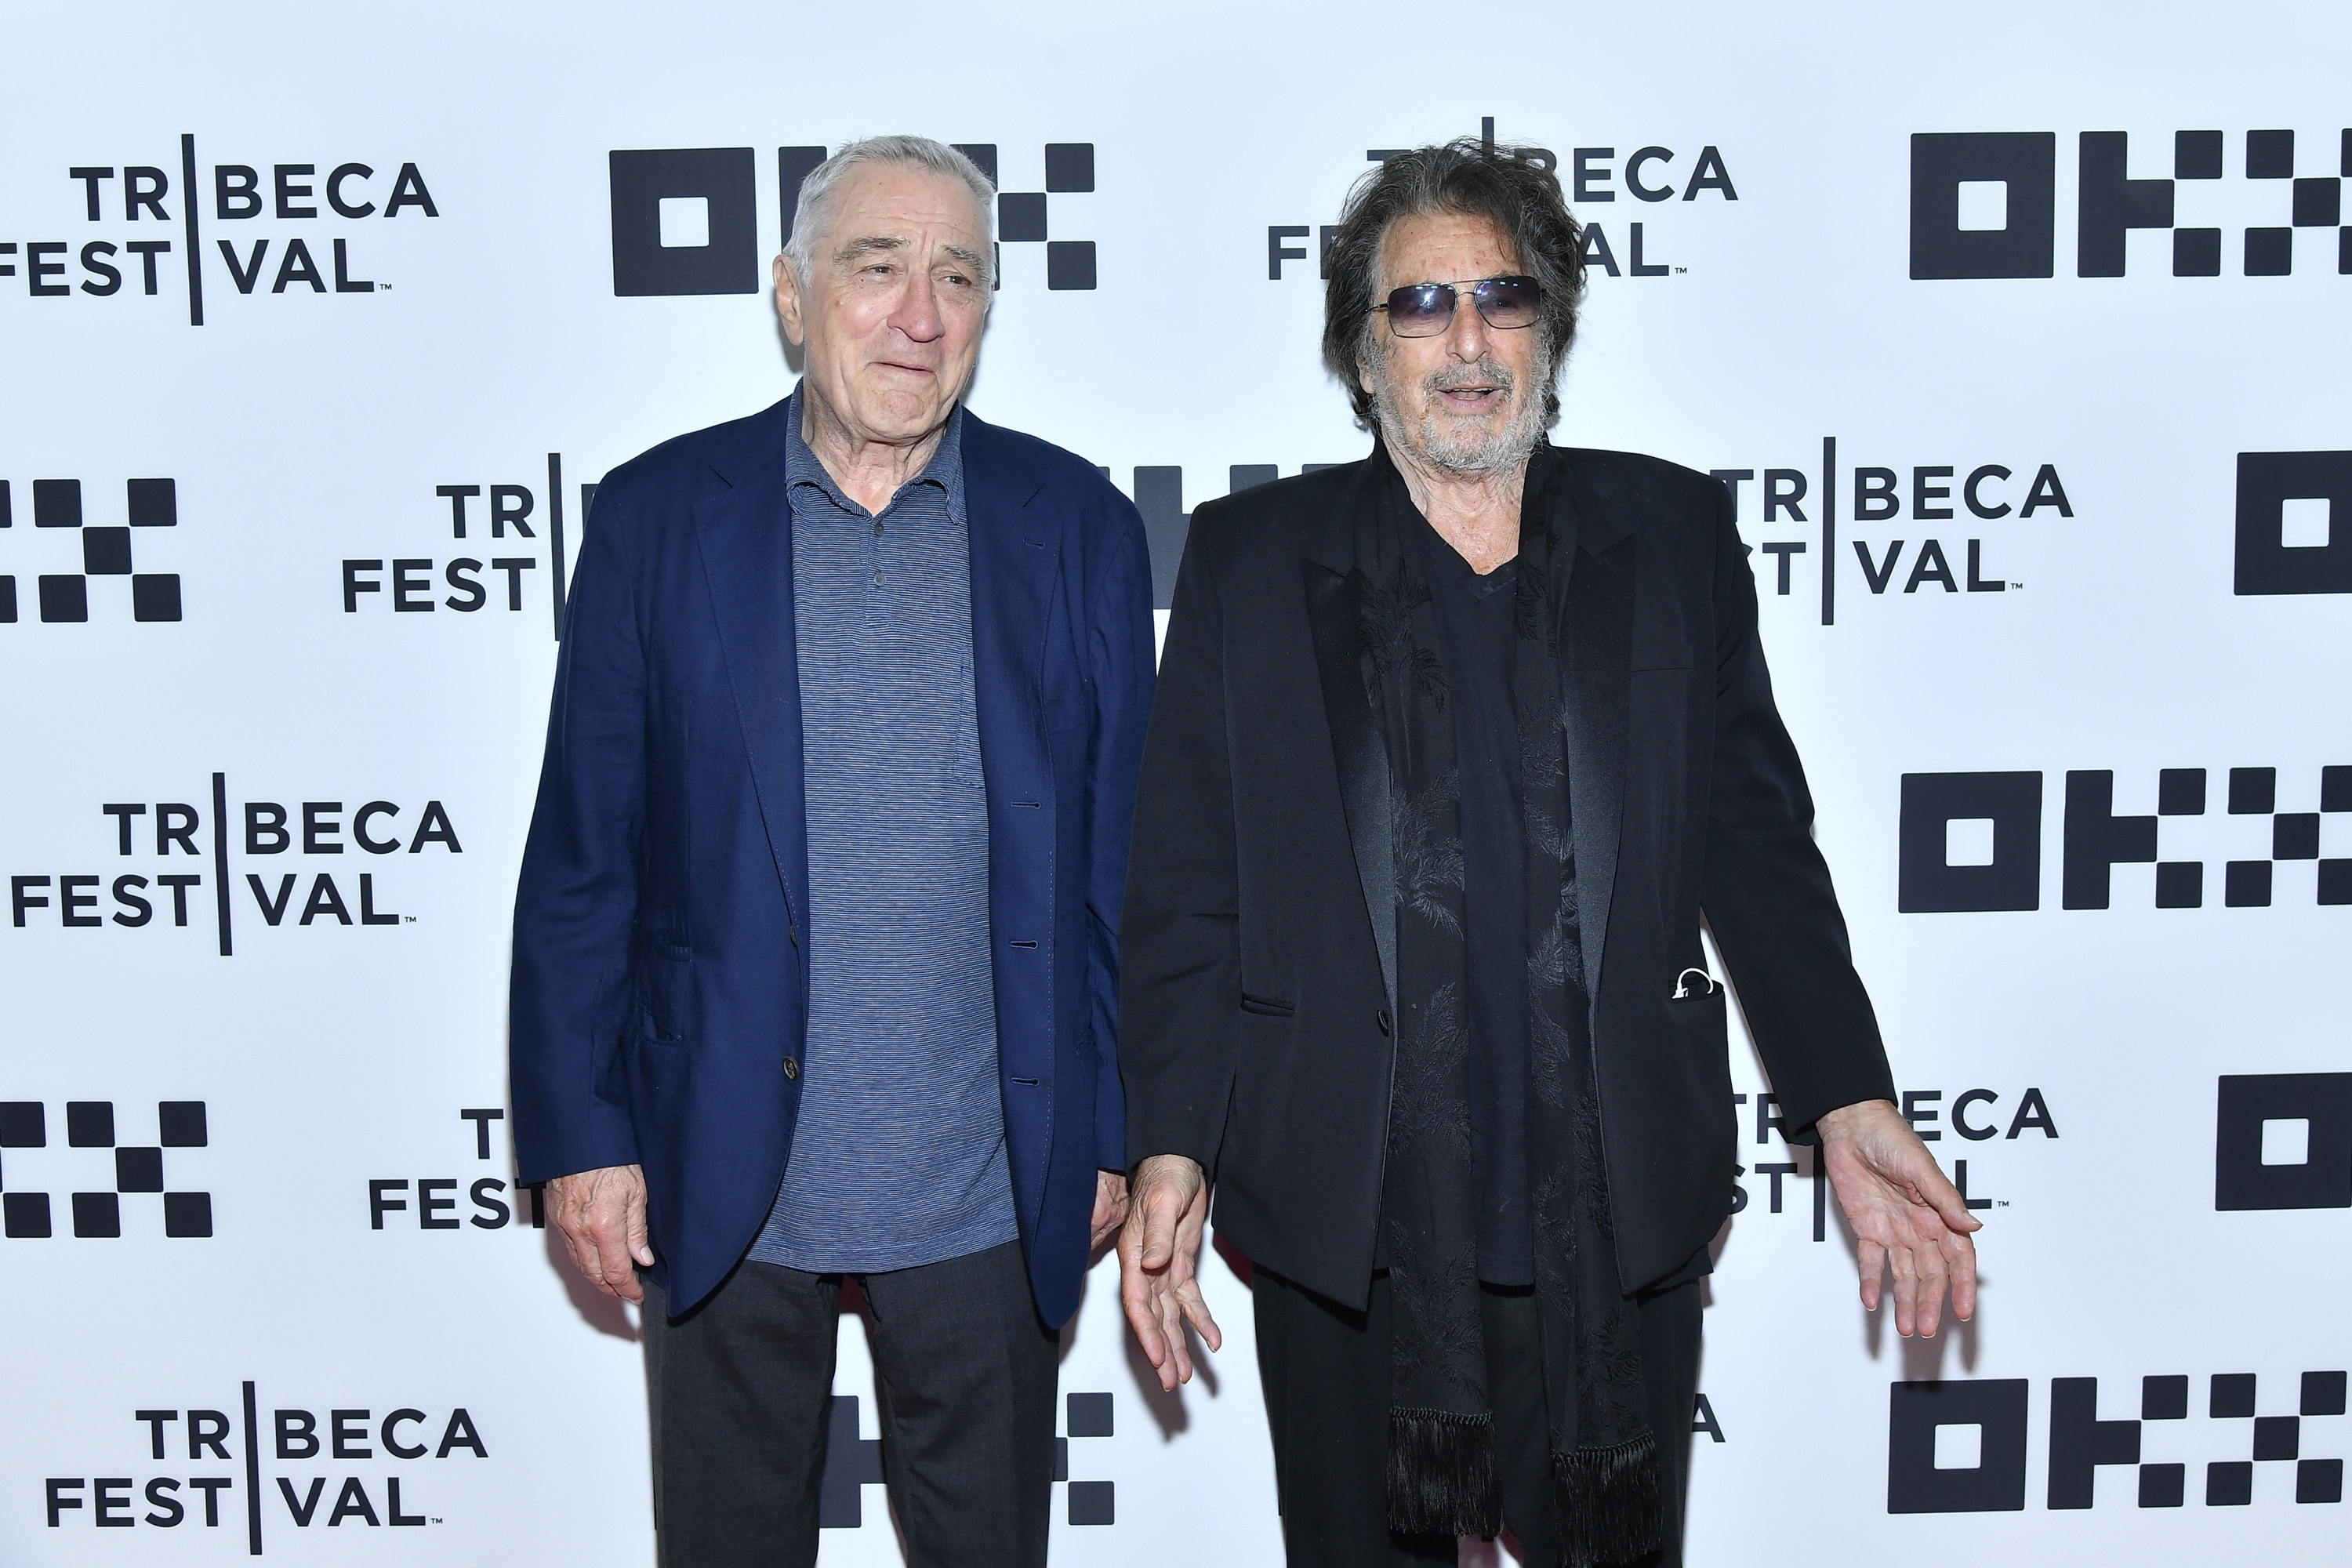 De Niro and Pacino standing together